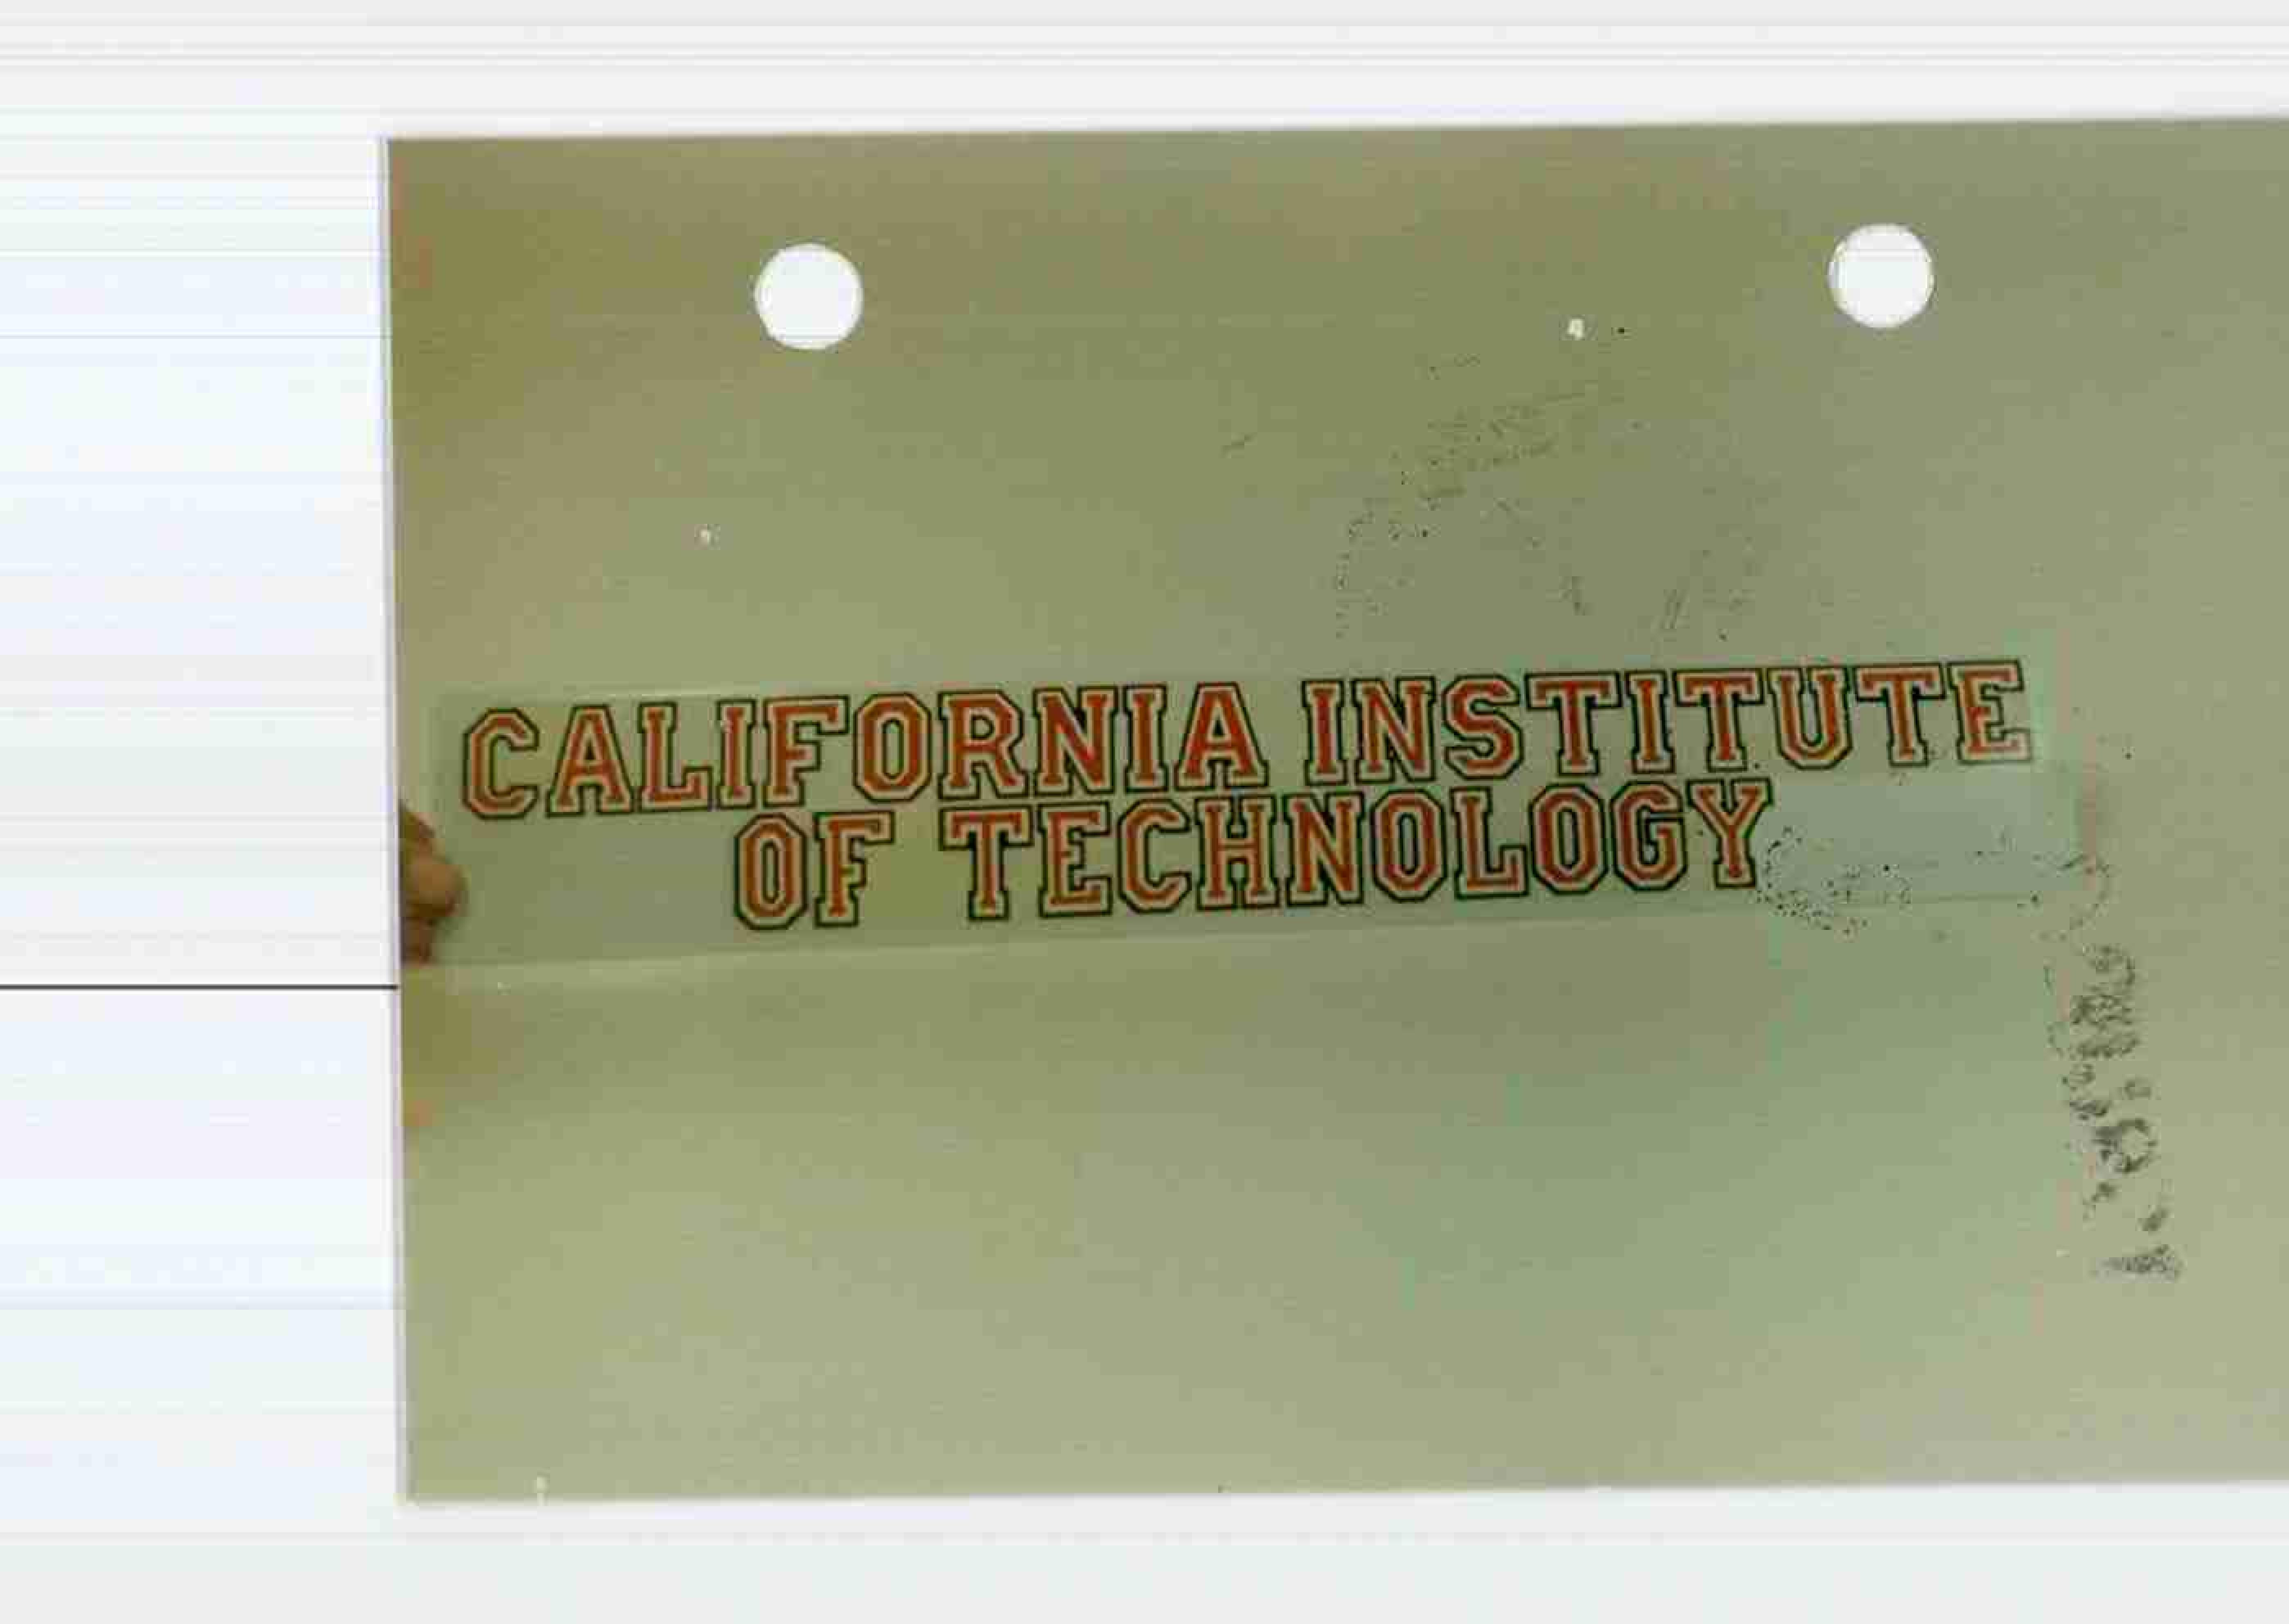  CALIFORNIA INSTITUTE OF TECHNOLOGY